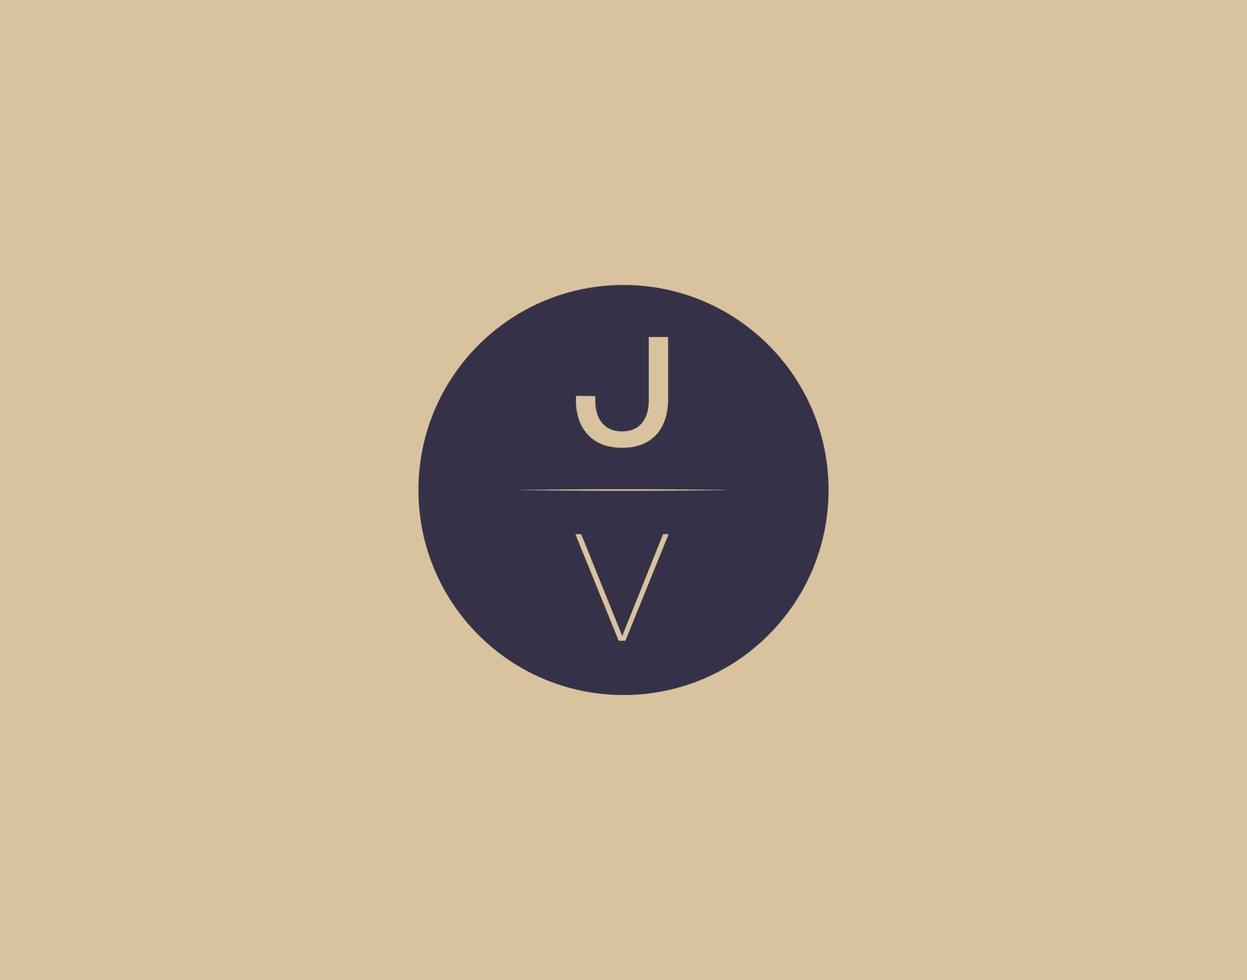 JV letter modern elegant logo design vector images